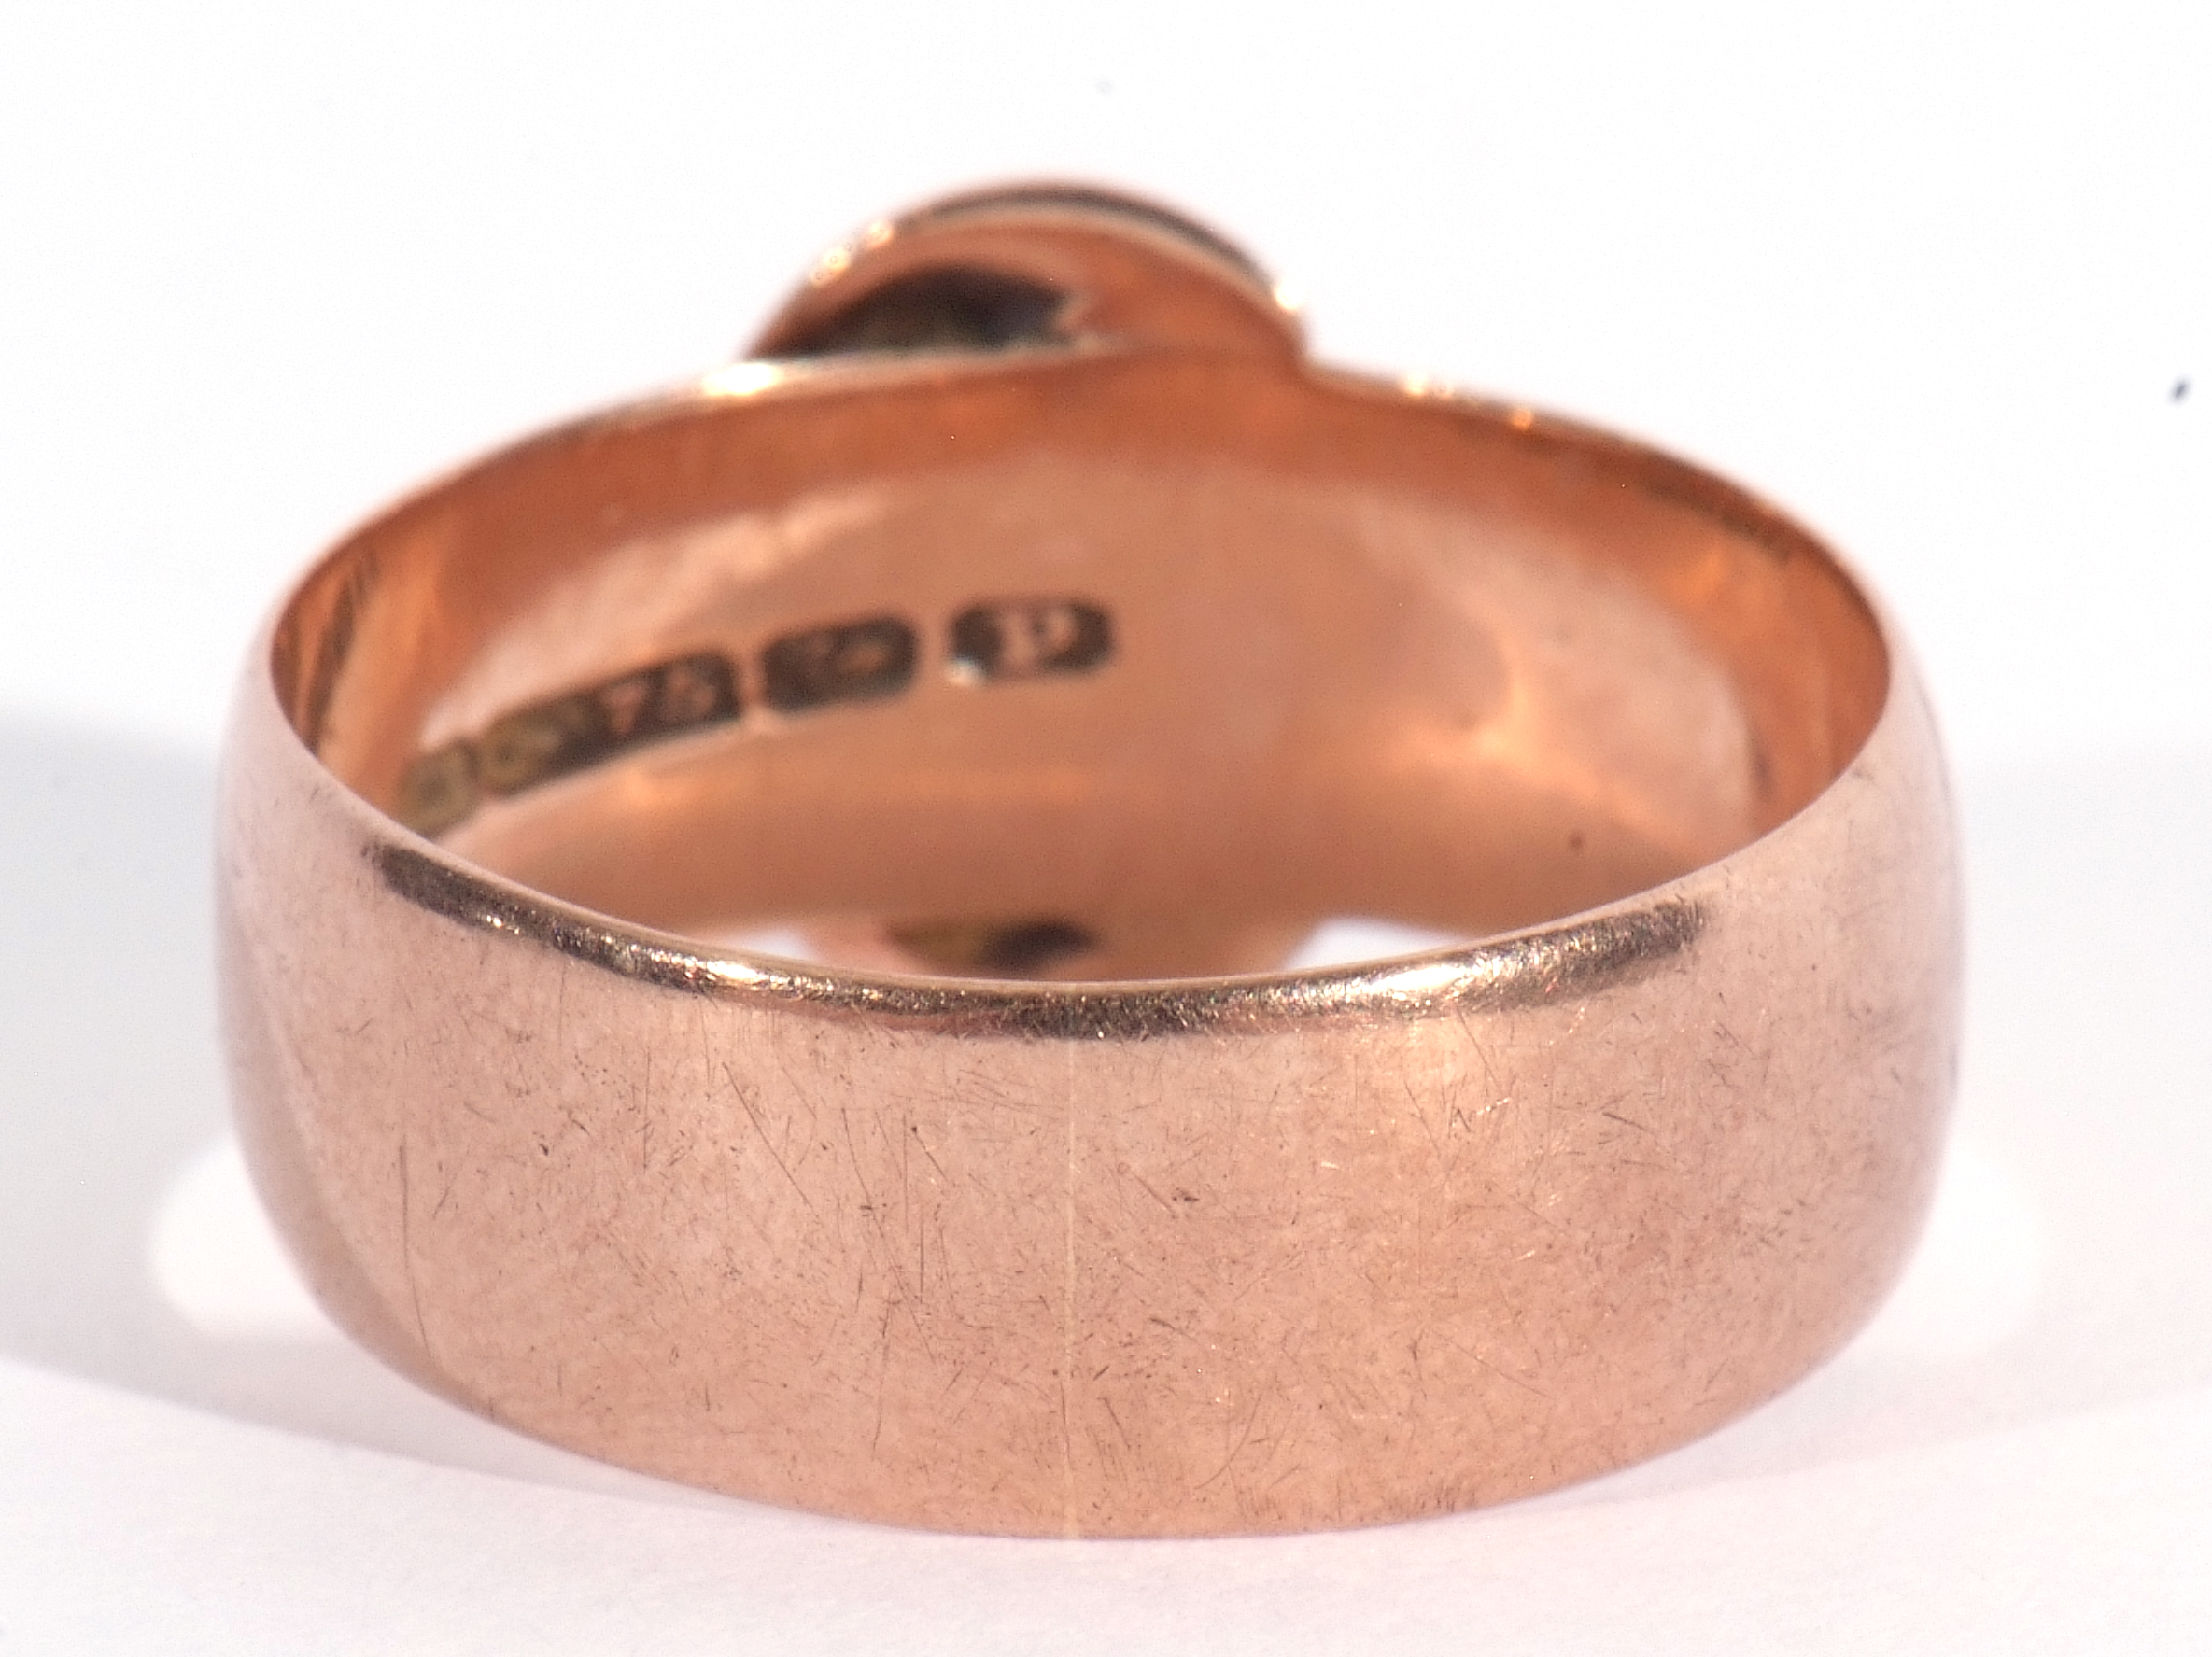 9ct rose gold buckle ring of plain polished design, 3.5gms, size N - Image 3 of 5